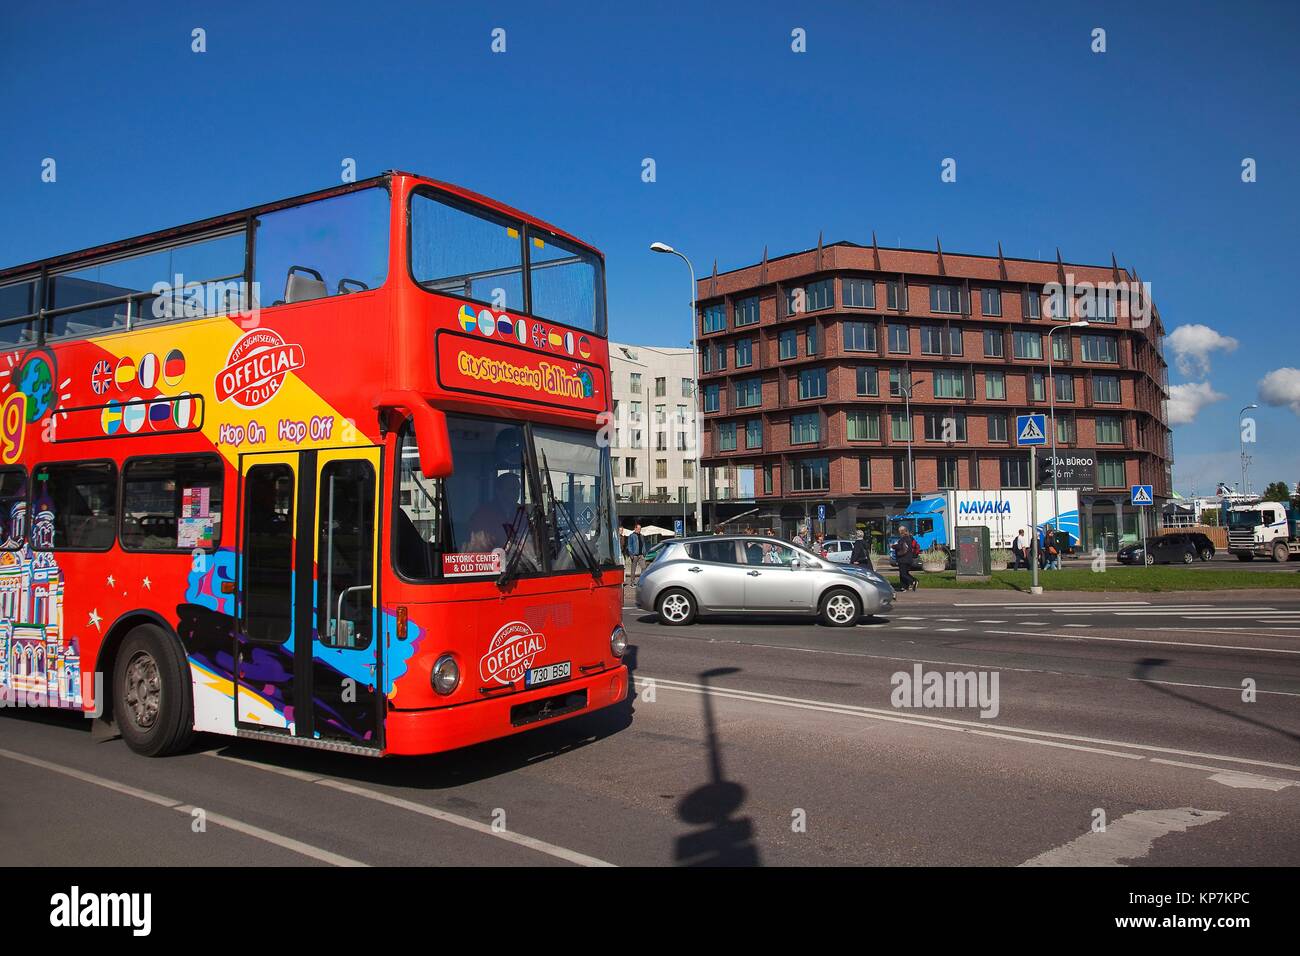 Hop On Hop Off tour bus in the city centre, Tallinn, Estonia, Baltic States, Europe. Stock Photo